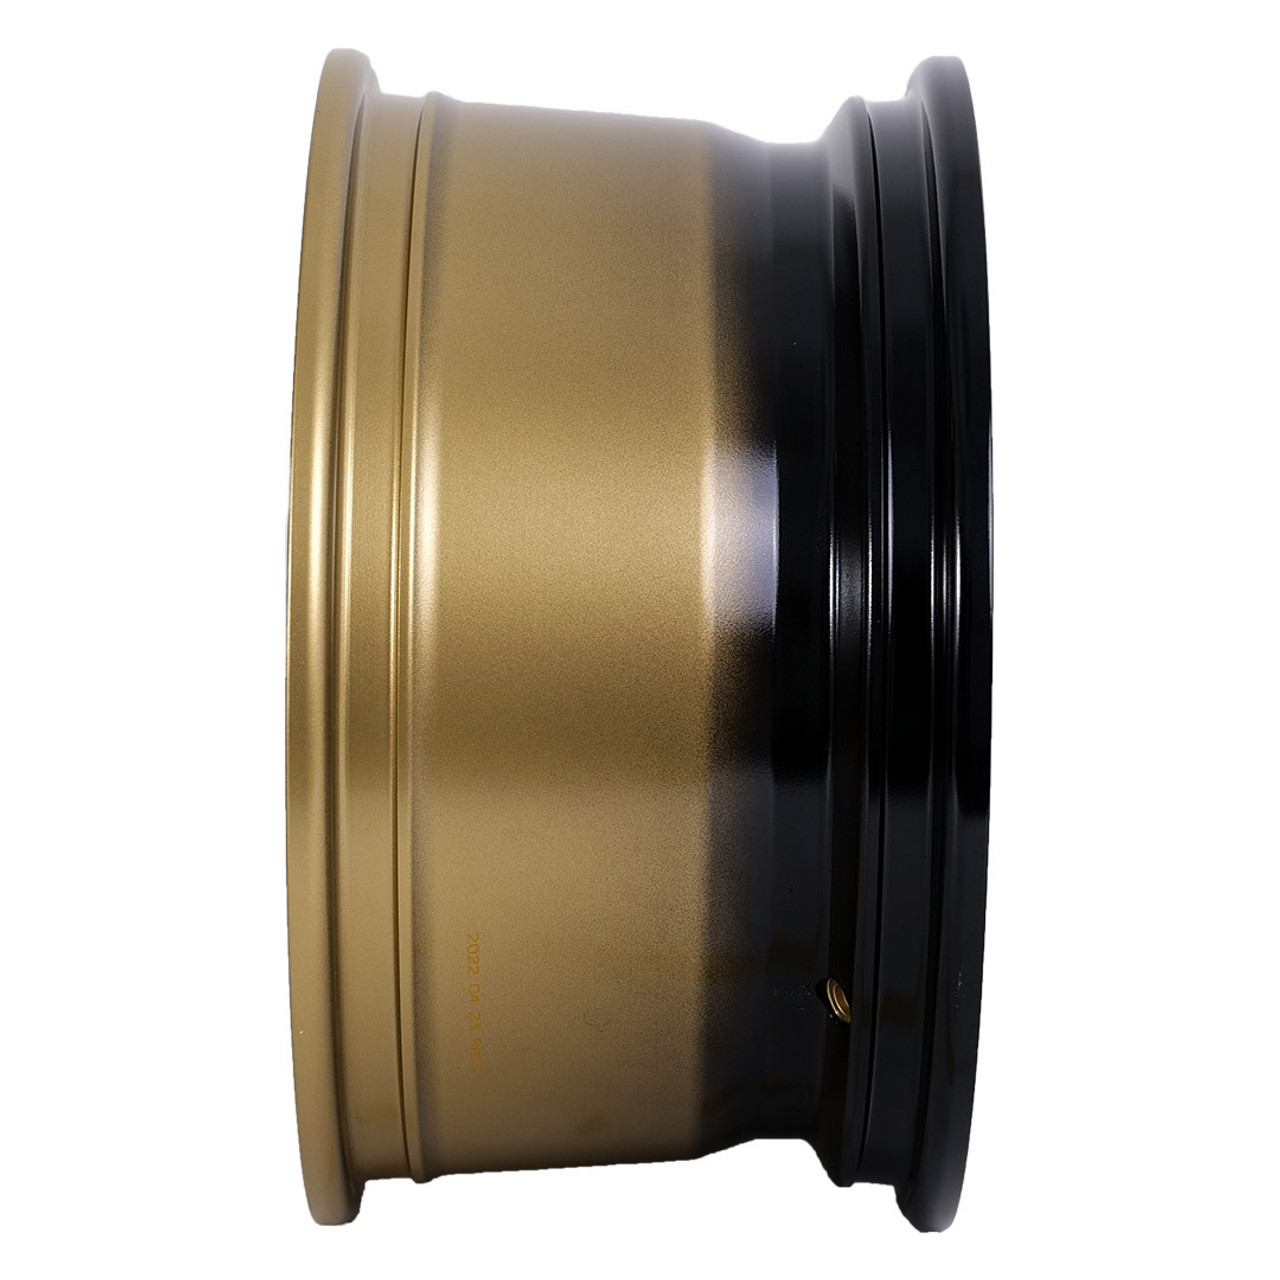 17" Tremor 103 Impact Gloss Gold/Gloss Black Lip Wheel 17x8.5 8x170 0mm For Ford